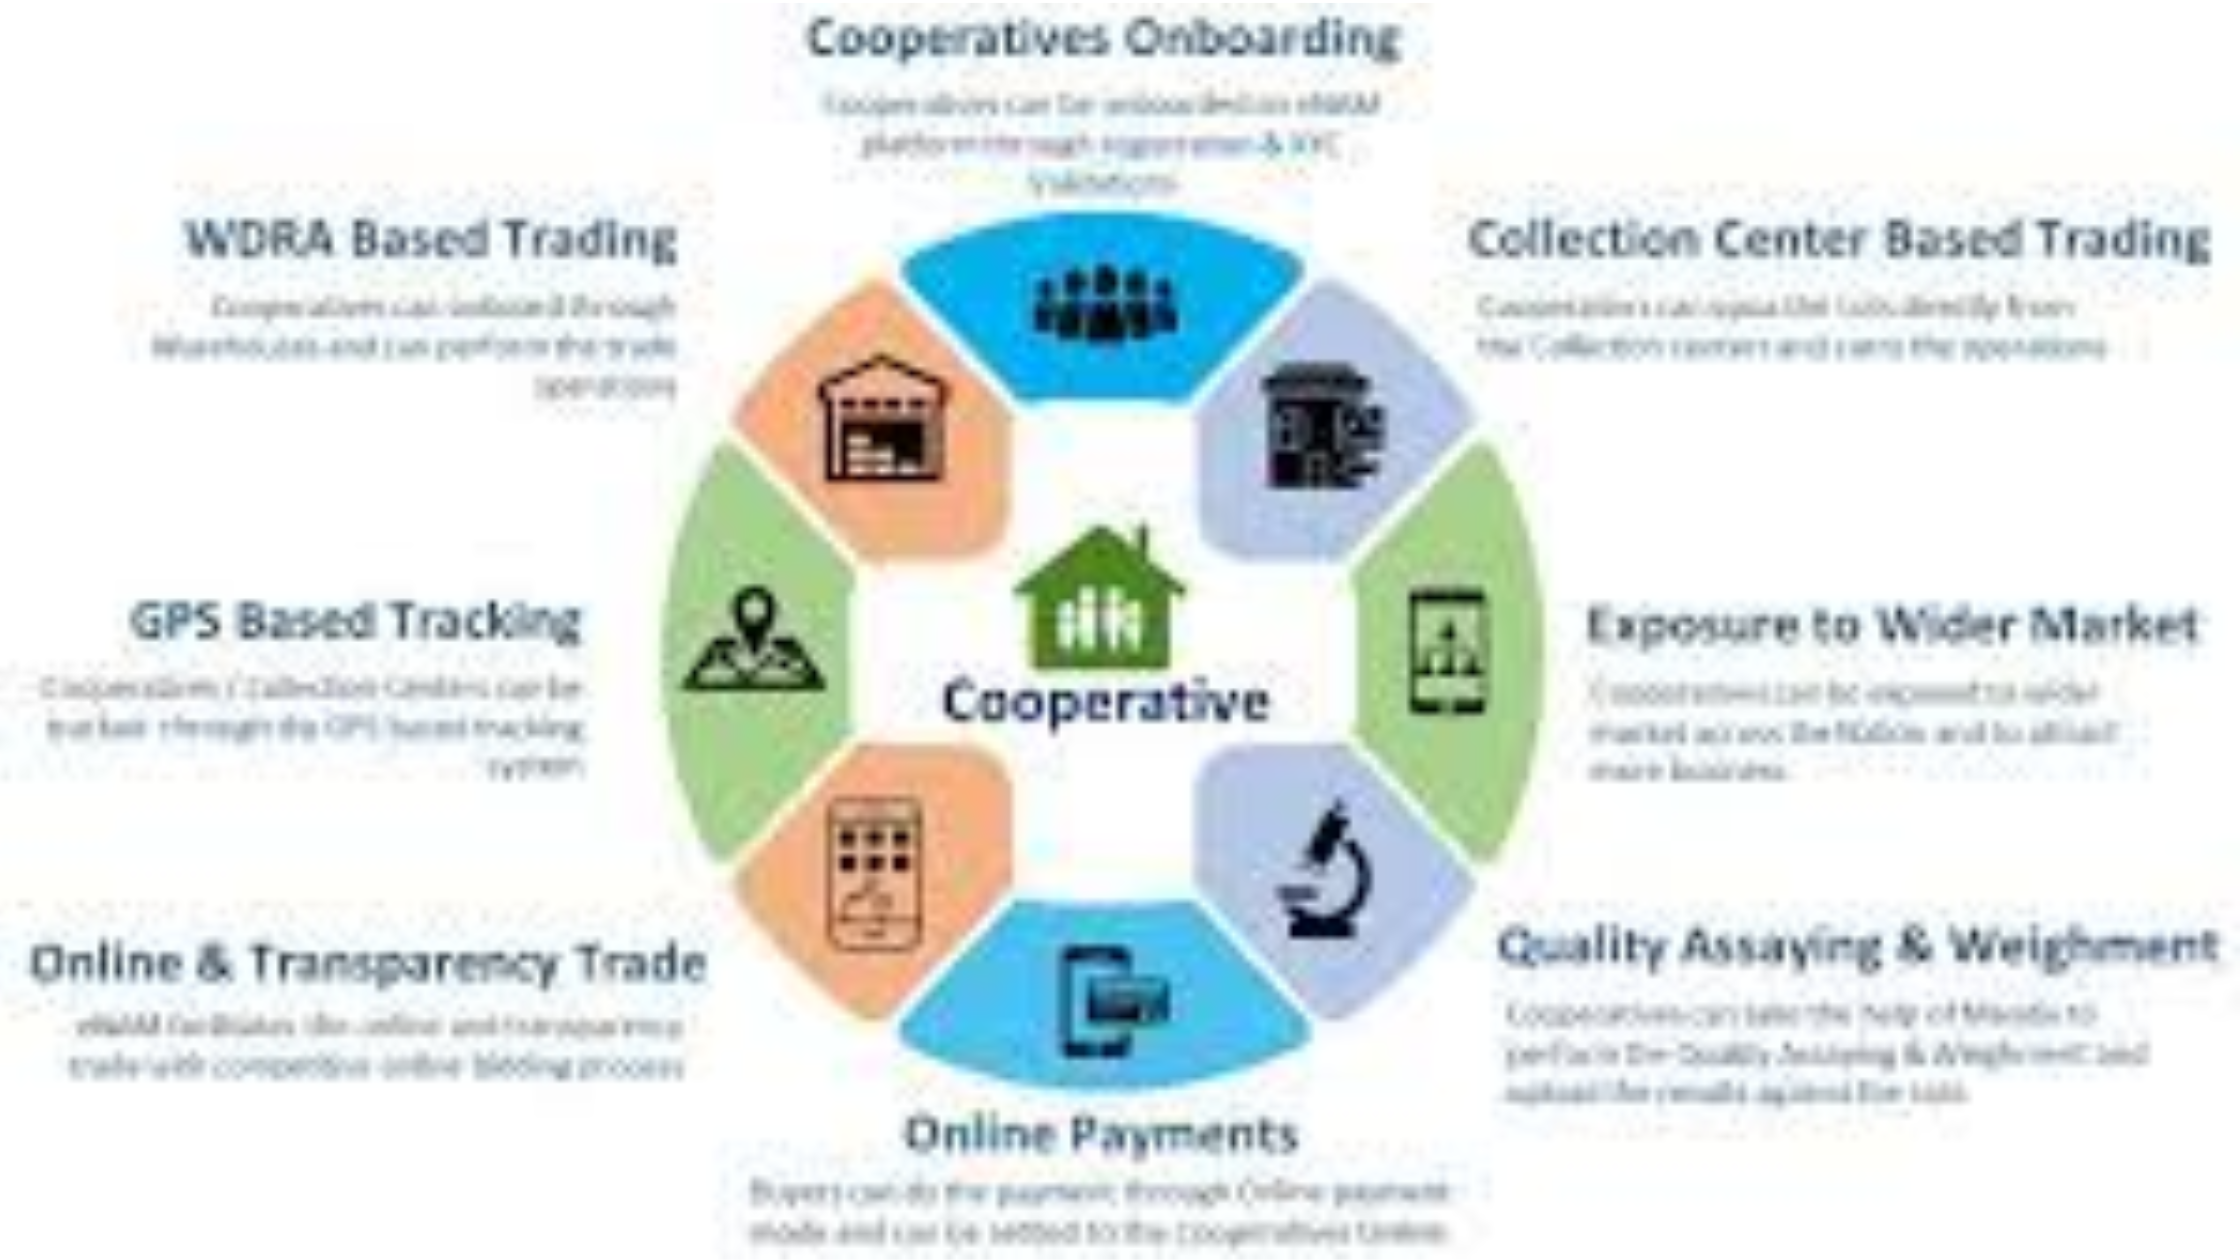 The cooperative company registration process